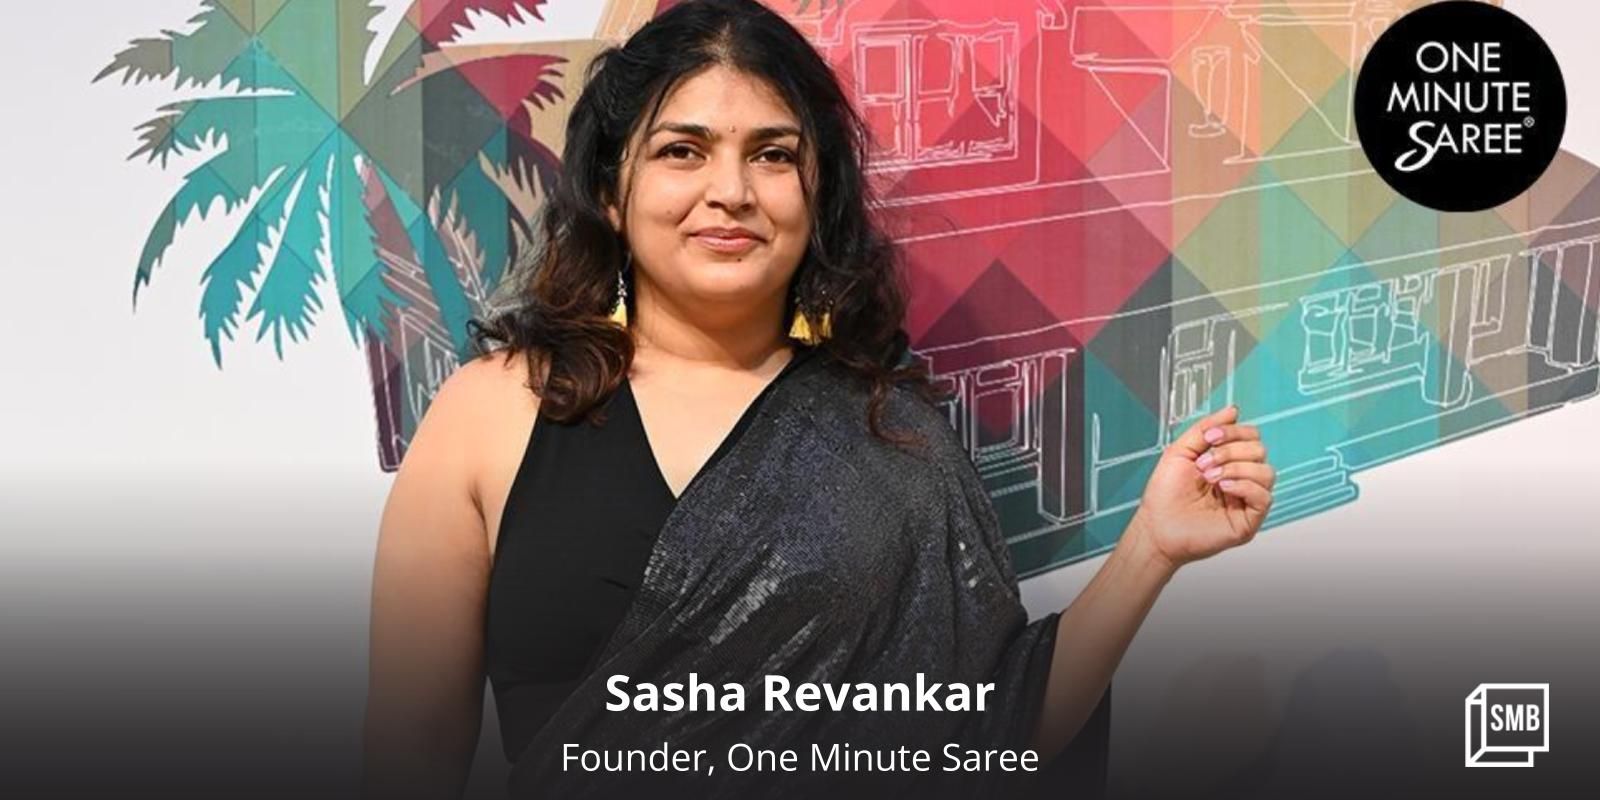 Meet the entrepreneur simplifying draping through One Minute Saree